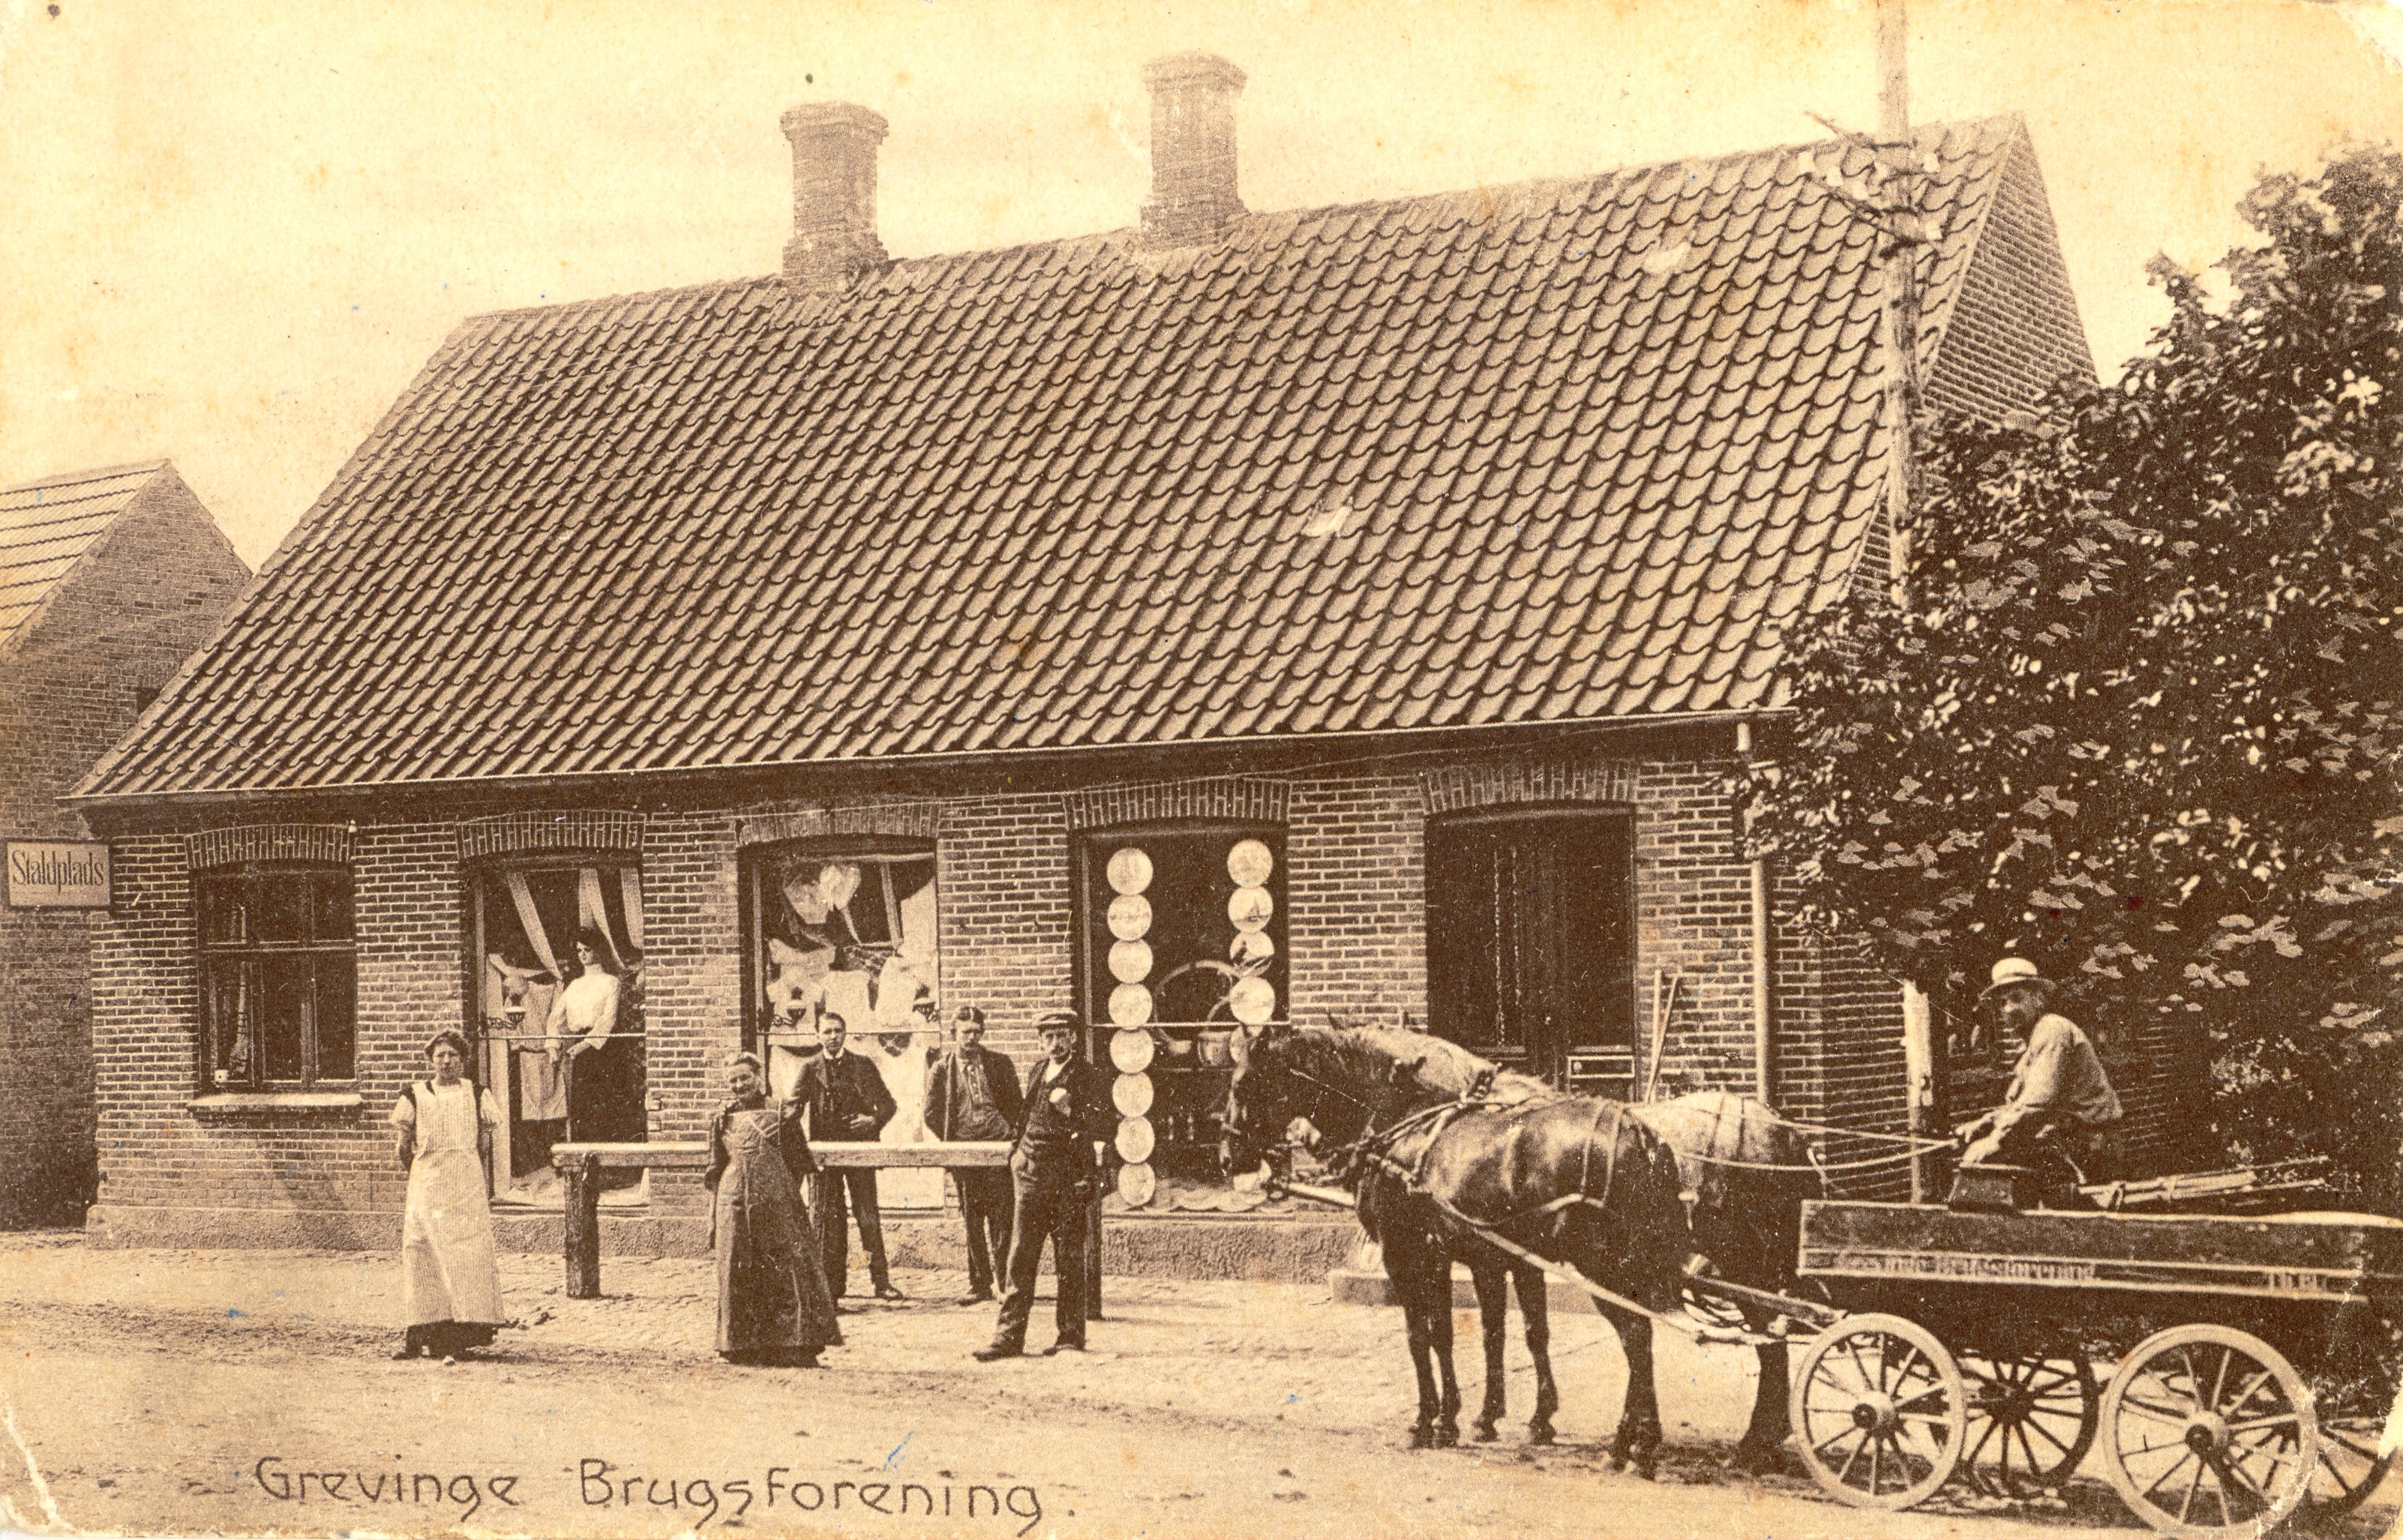 Grevinge Brugsforening - ca. 1899 (B9846)